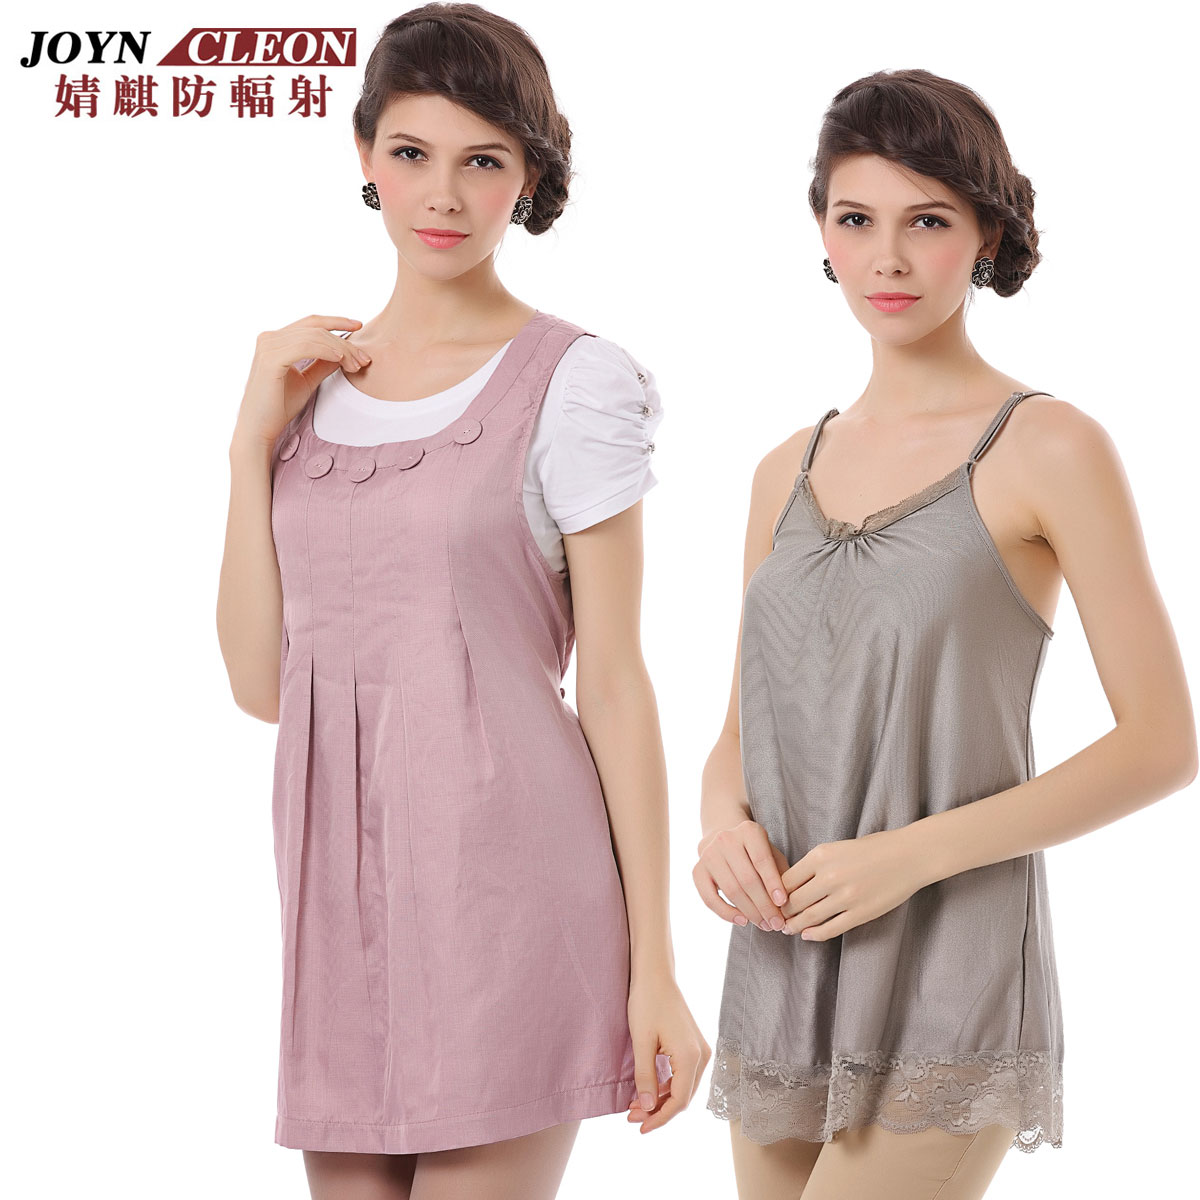 Joyncleon qi radiation-resistant maternity clothing radiation-resistant silver fiber maternity clothing spring and summer